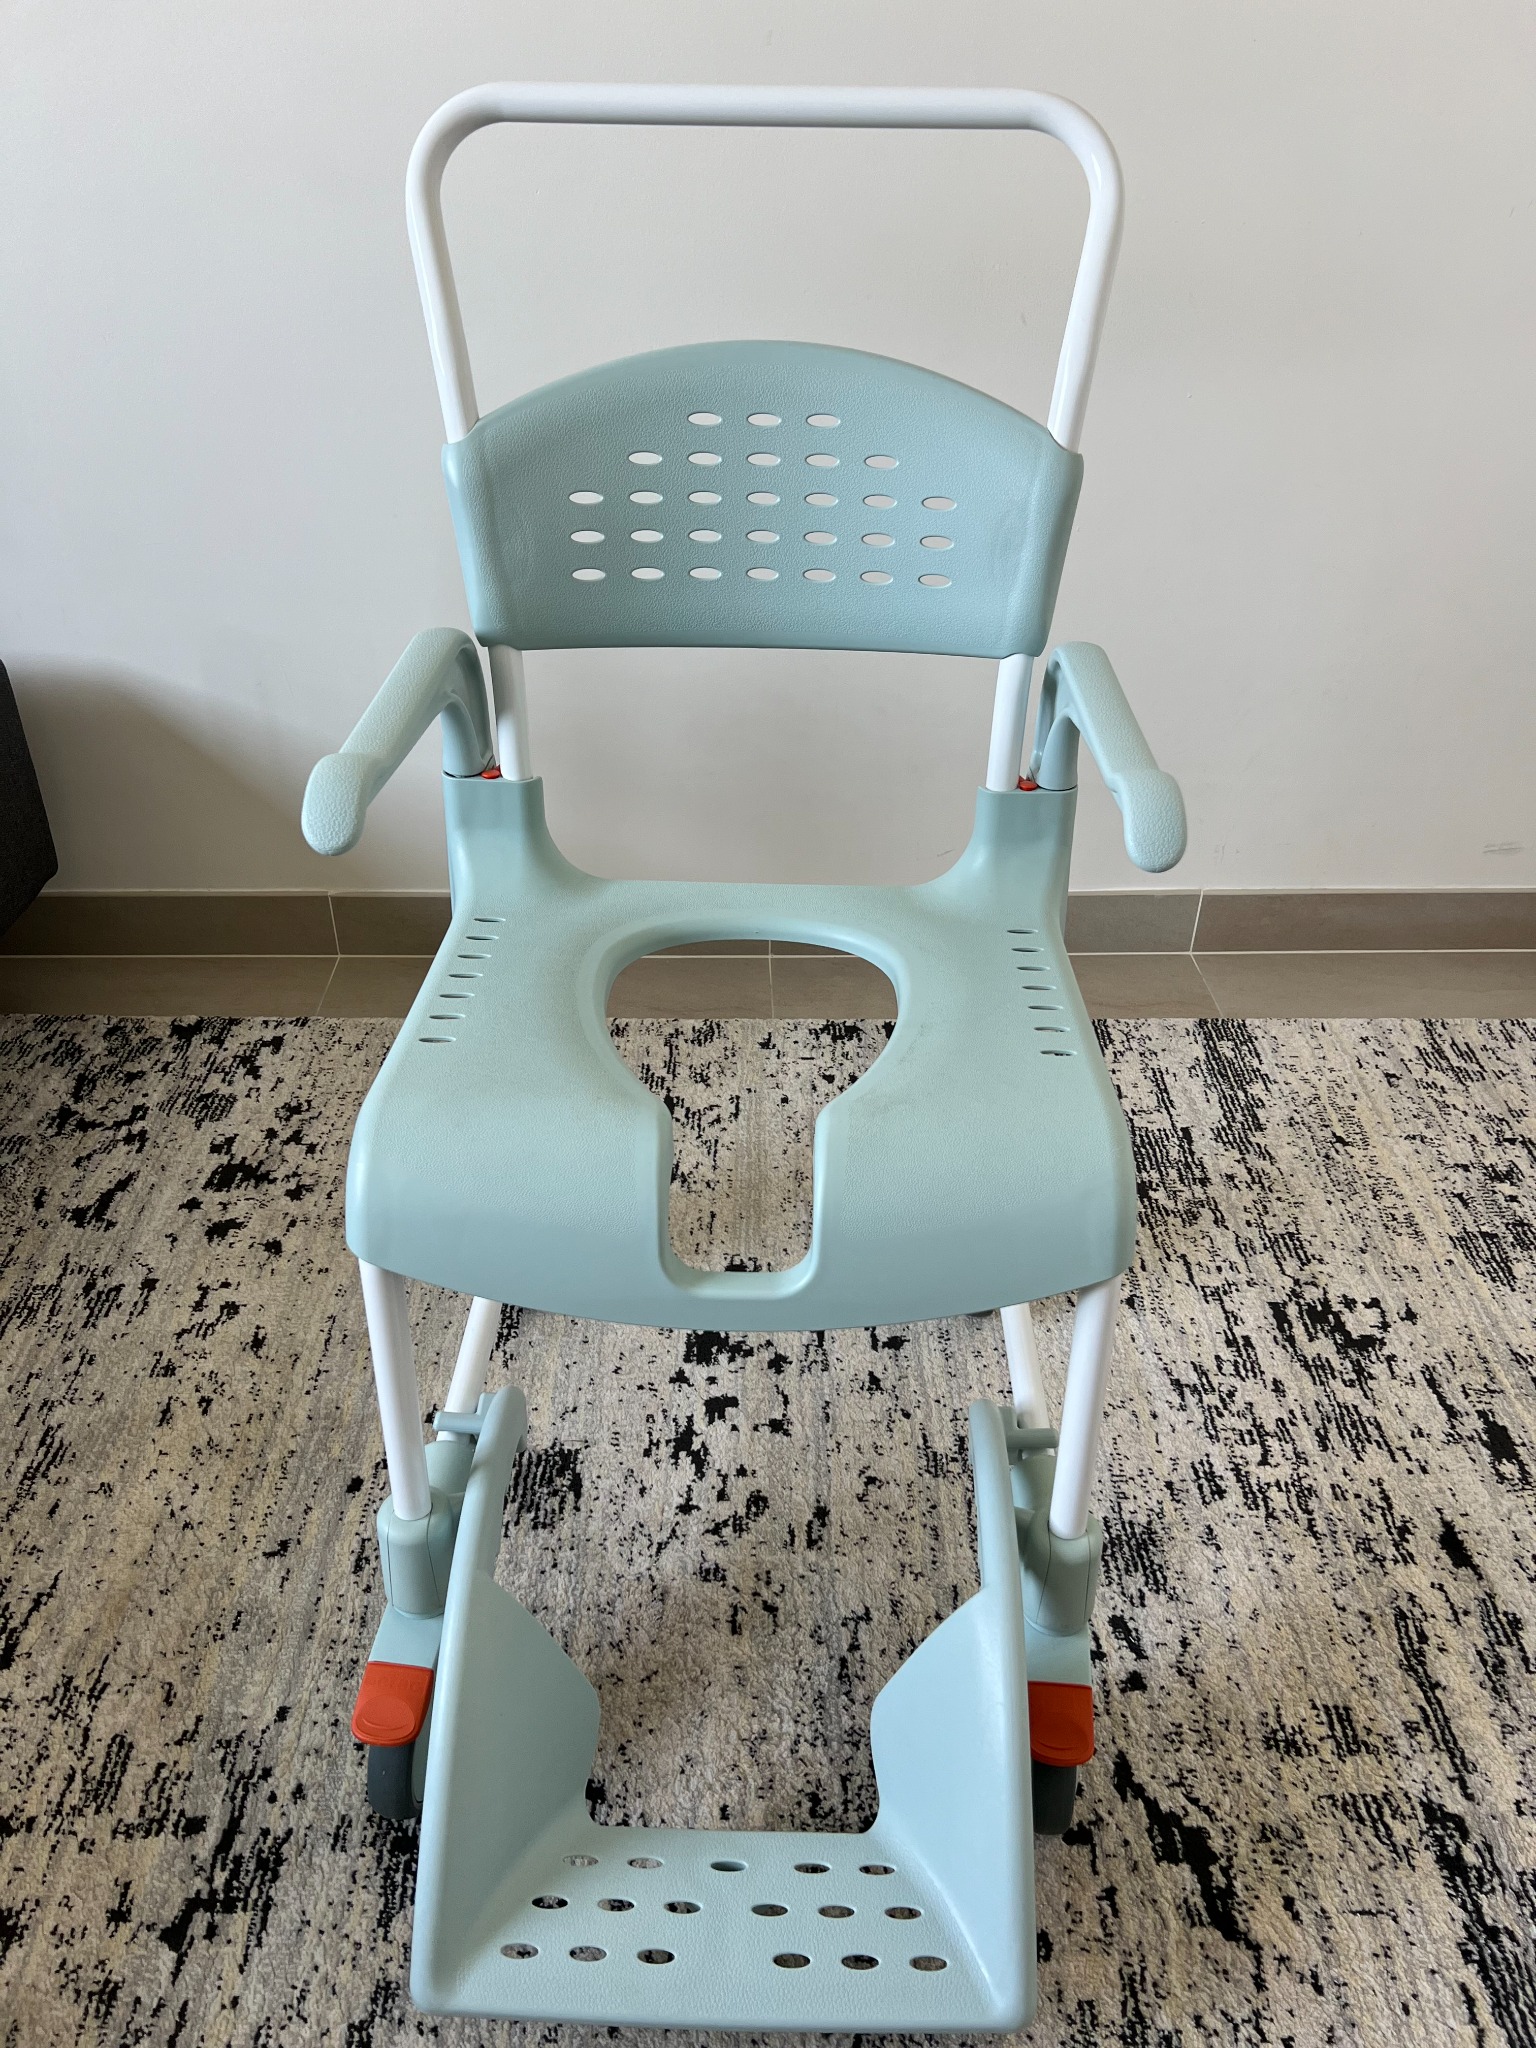 Etac Clean Shower Commode Chair